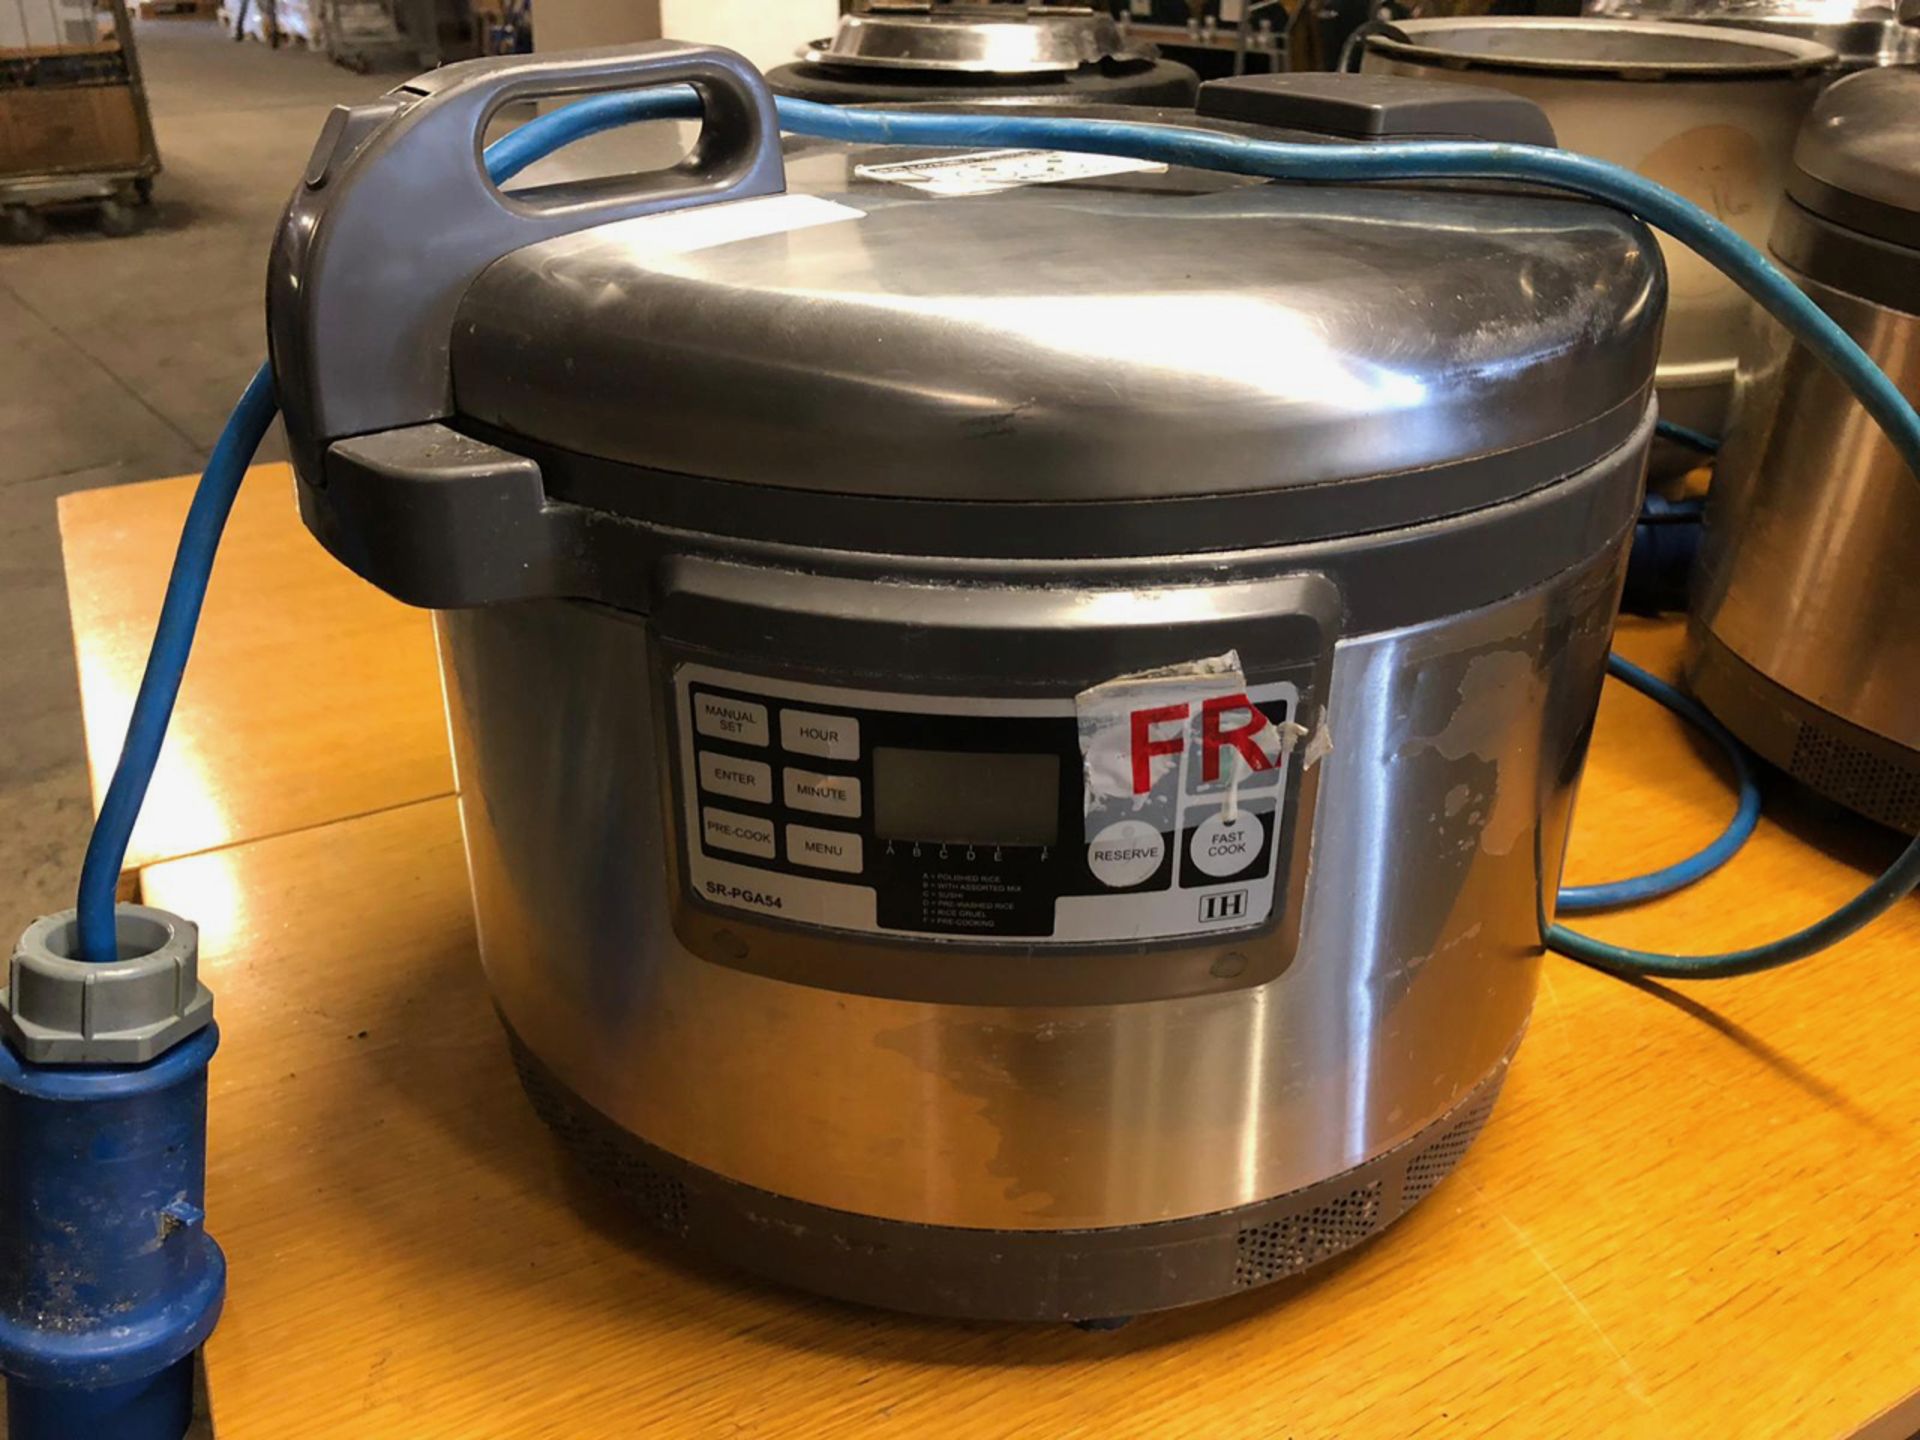 Panasonic SR-PGA54 rice cooker